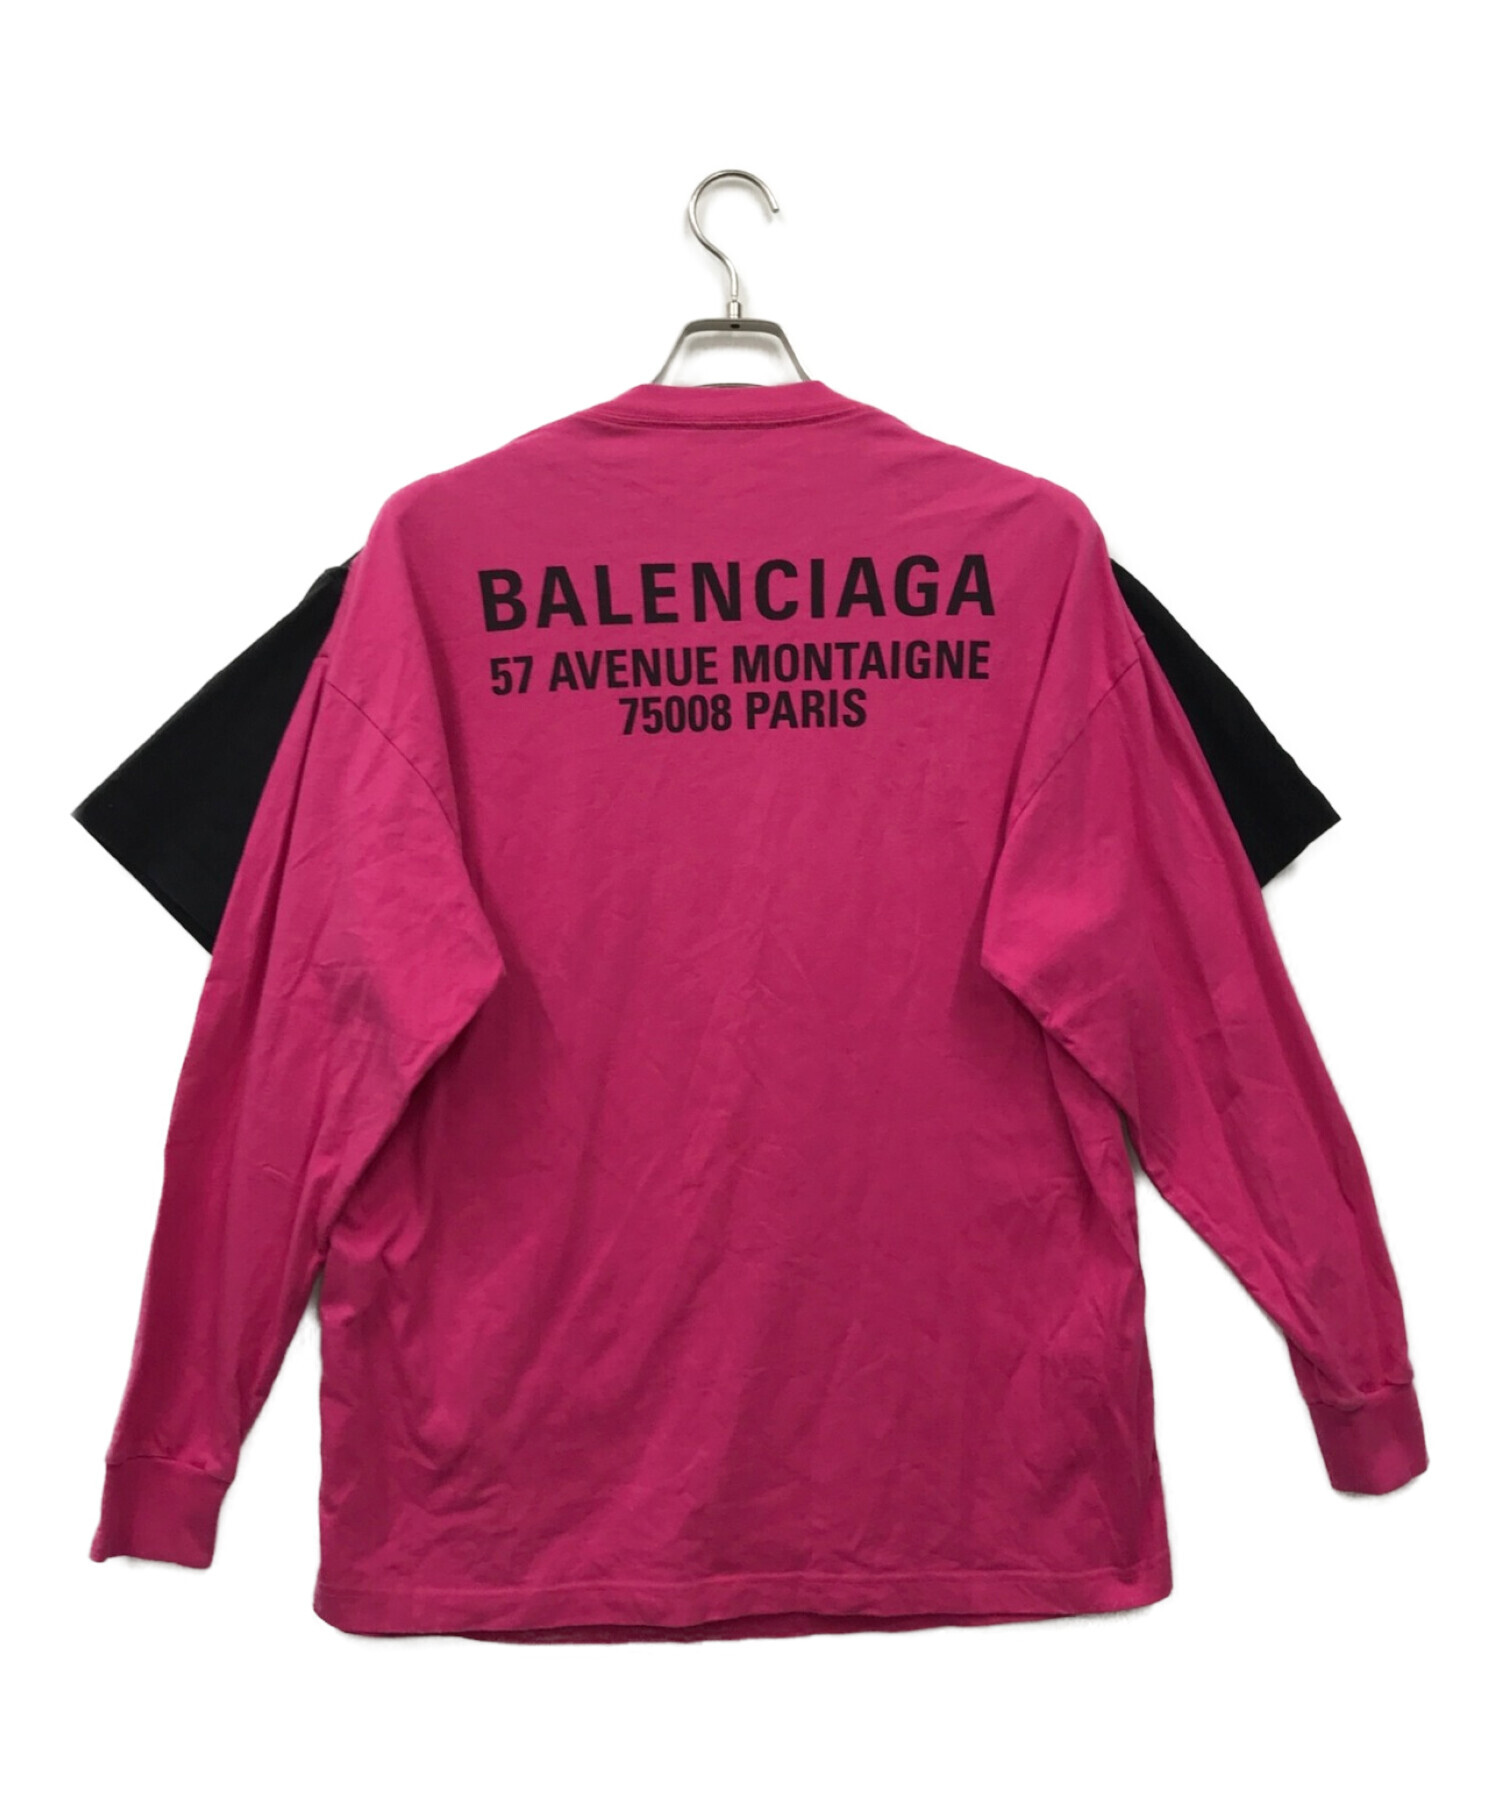 Balenciaga バレンシアガ Tシャツ サイズXS